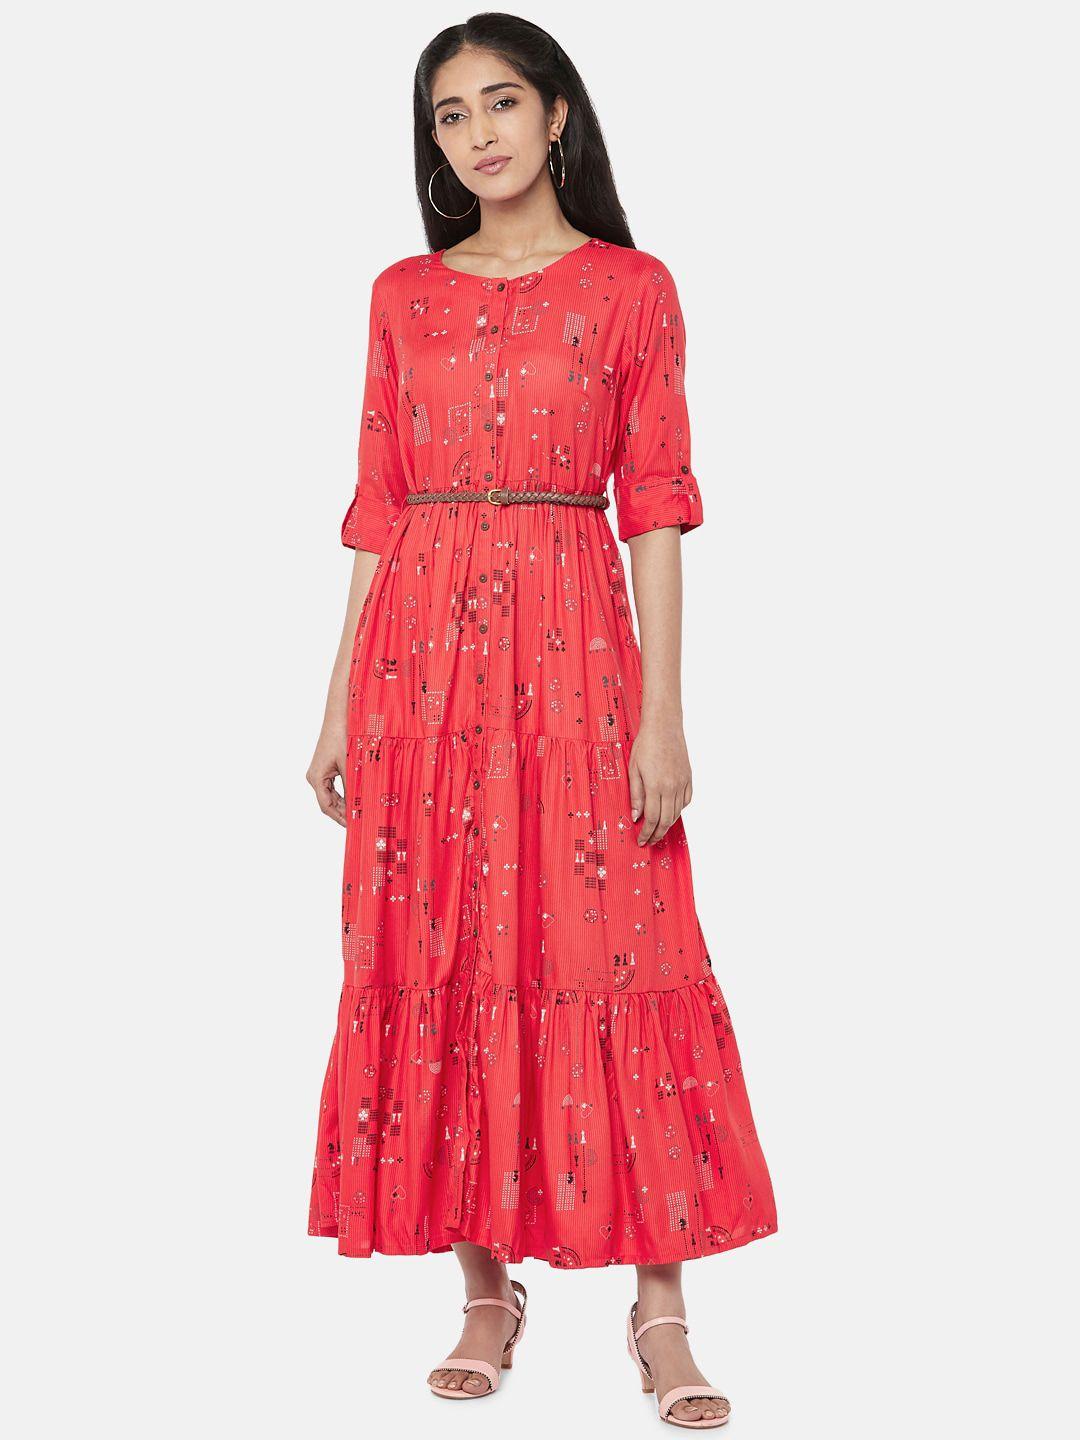 akkriti by pantaloons women red printed maxi dress